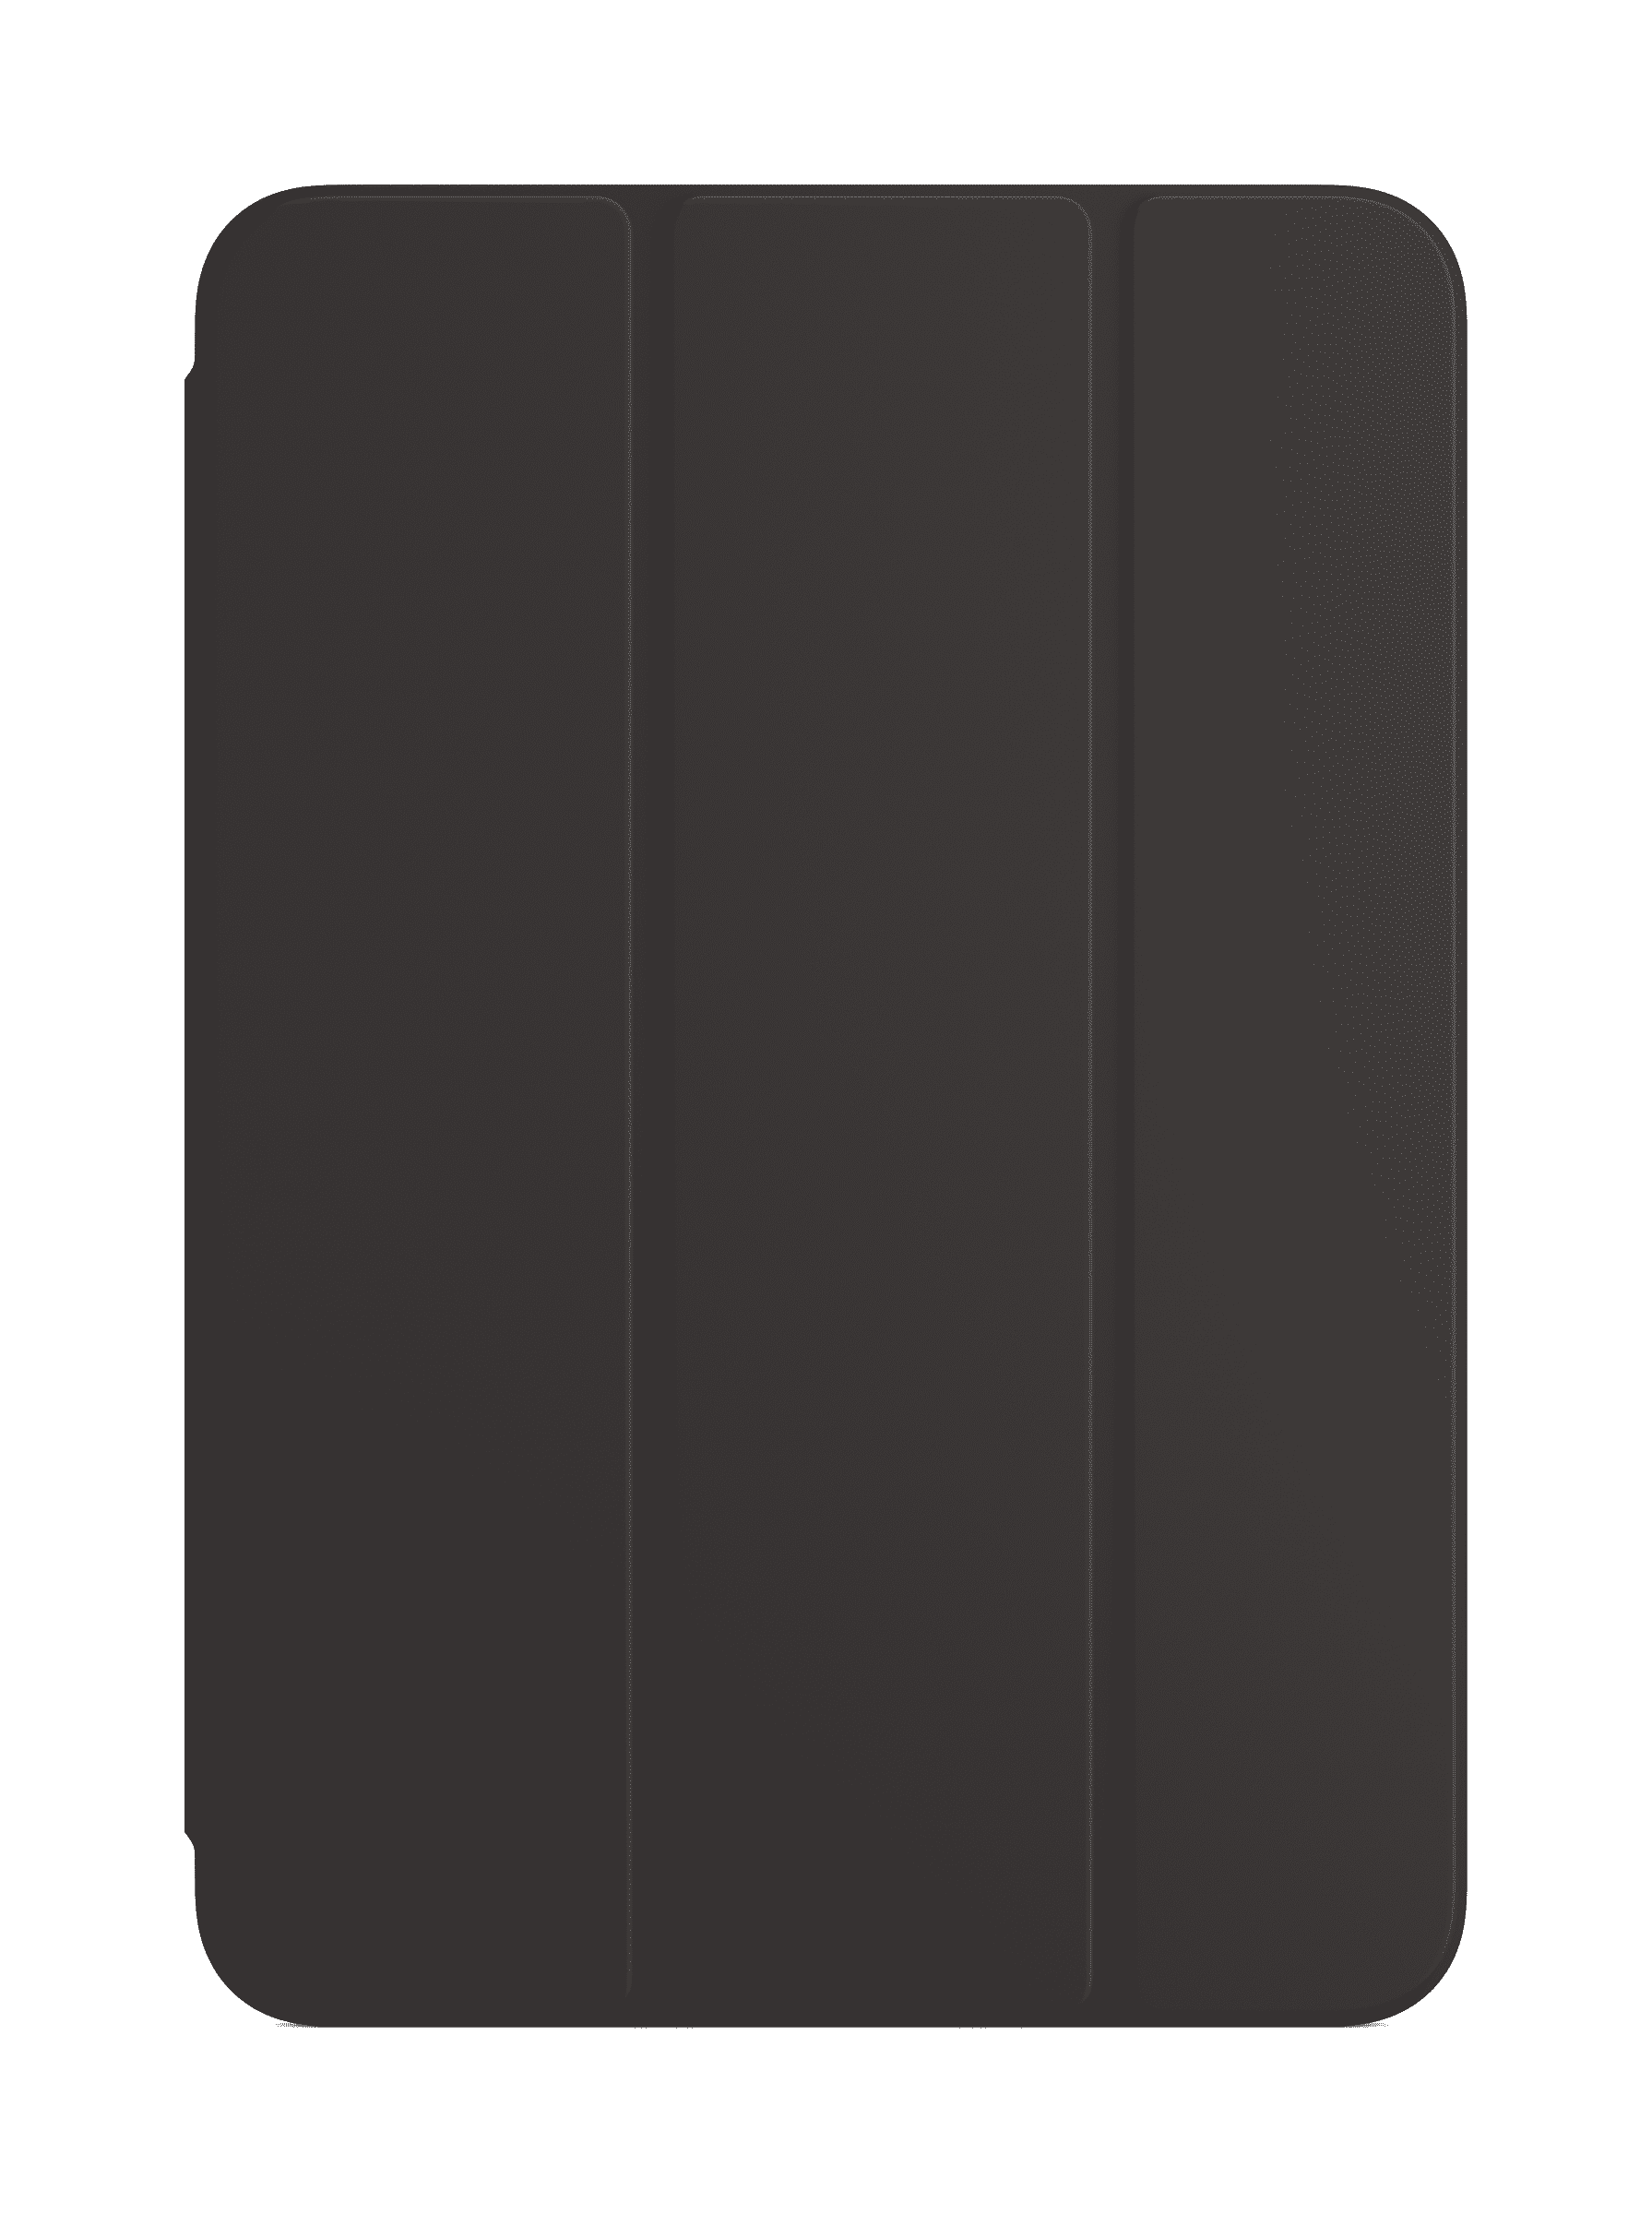 Mini 4 iPad Mini 4 2015 Tablets Ultra Lightweight Folio Flip Smart Auto Sleep/Wake Cover Case with Wireless Keyboard for iPad Mini 5th Gen 2019 IVSO Keyboard Case for iPad Mini 5 Black